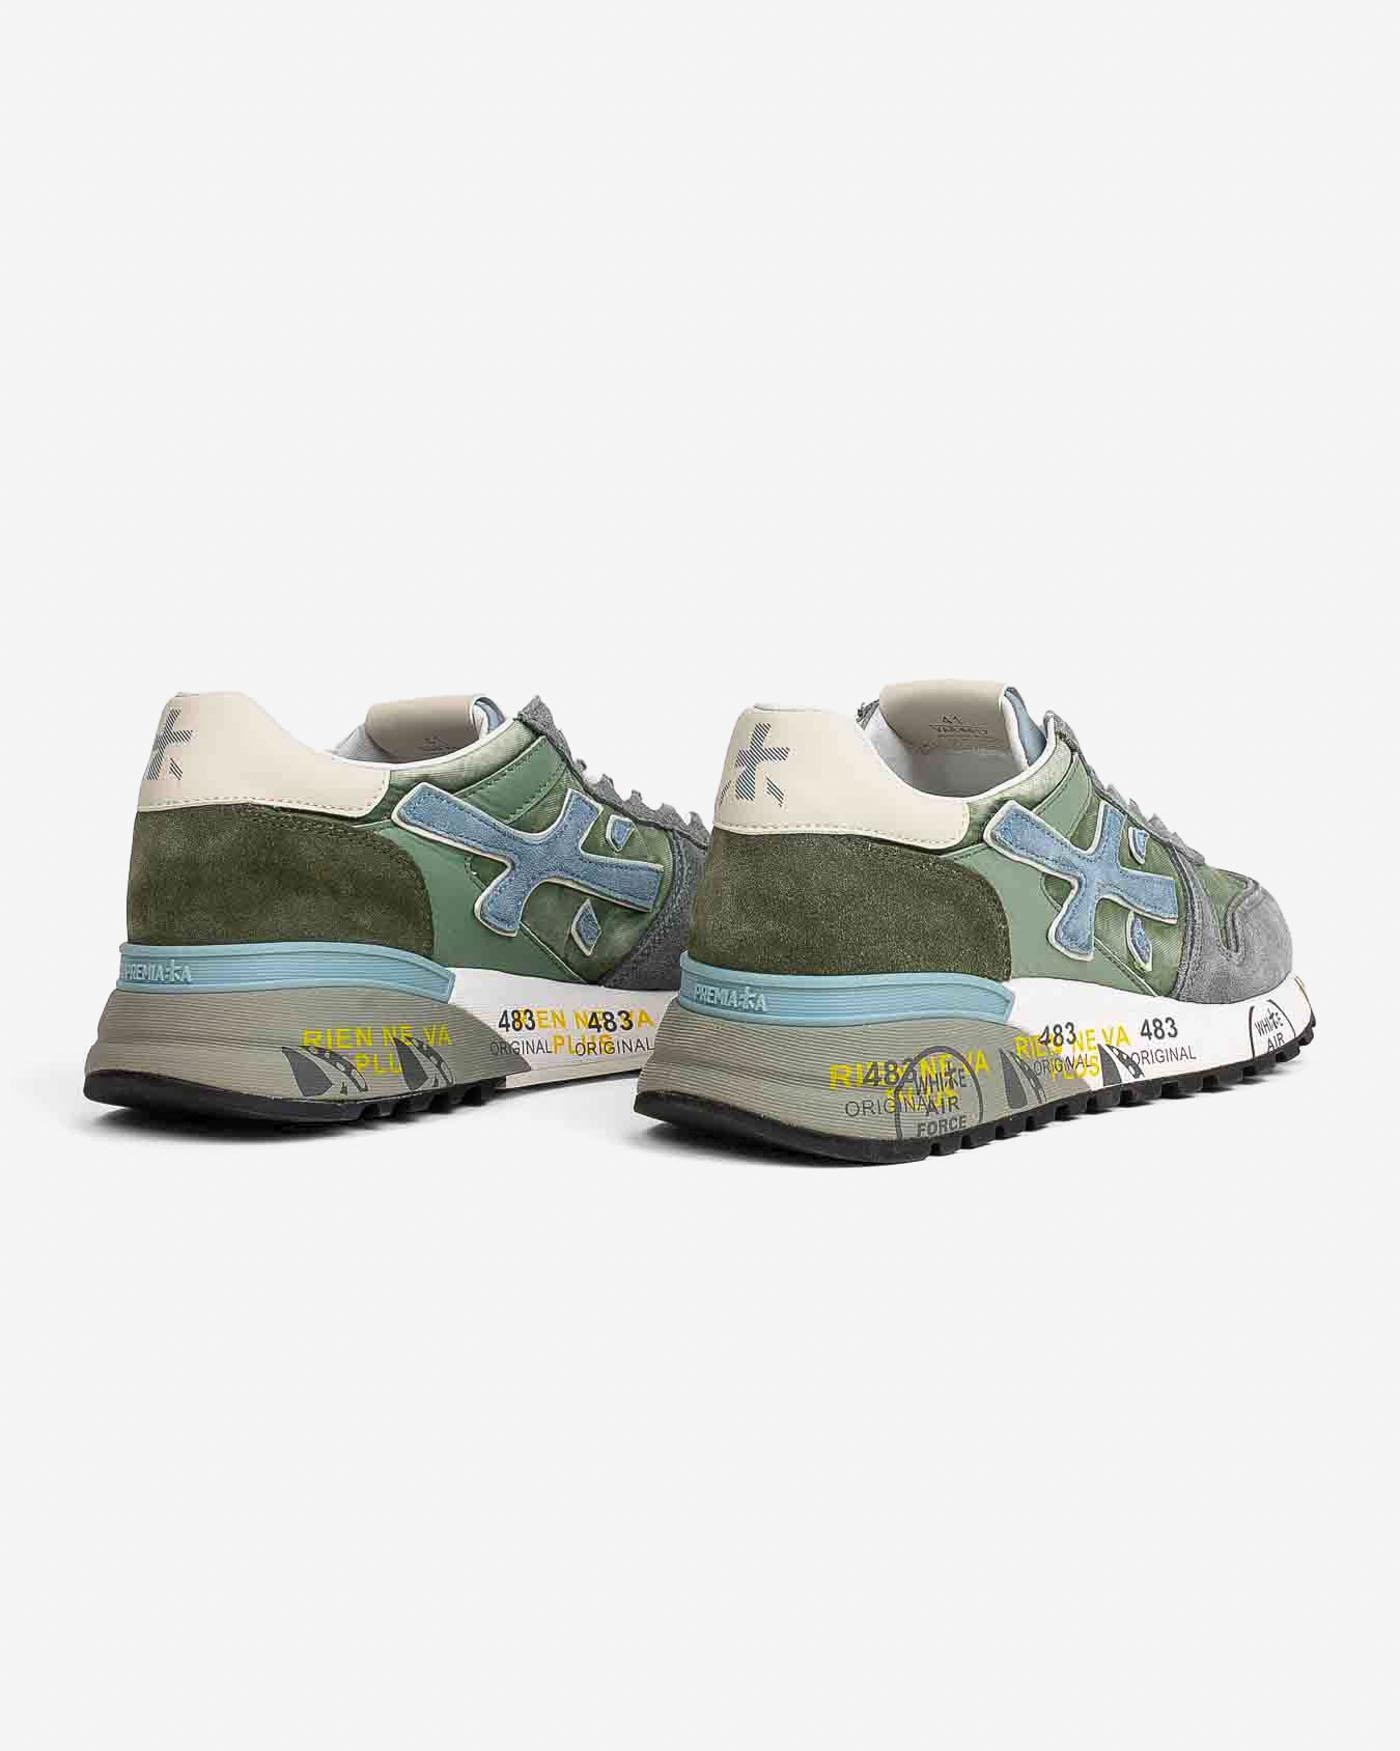 premiata-zapatillas-mick-var-6617-sneakers-green-verdes-5